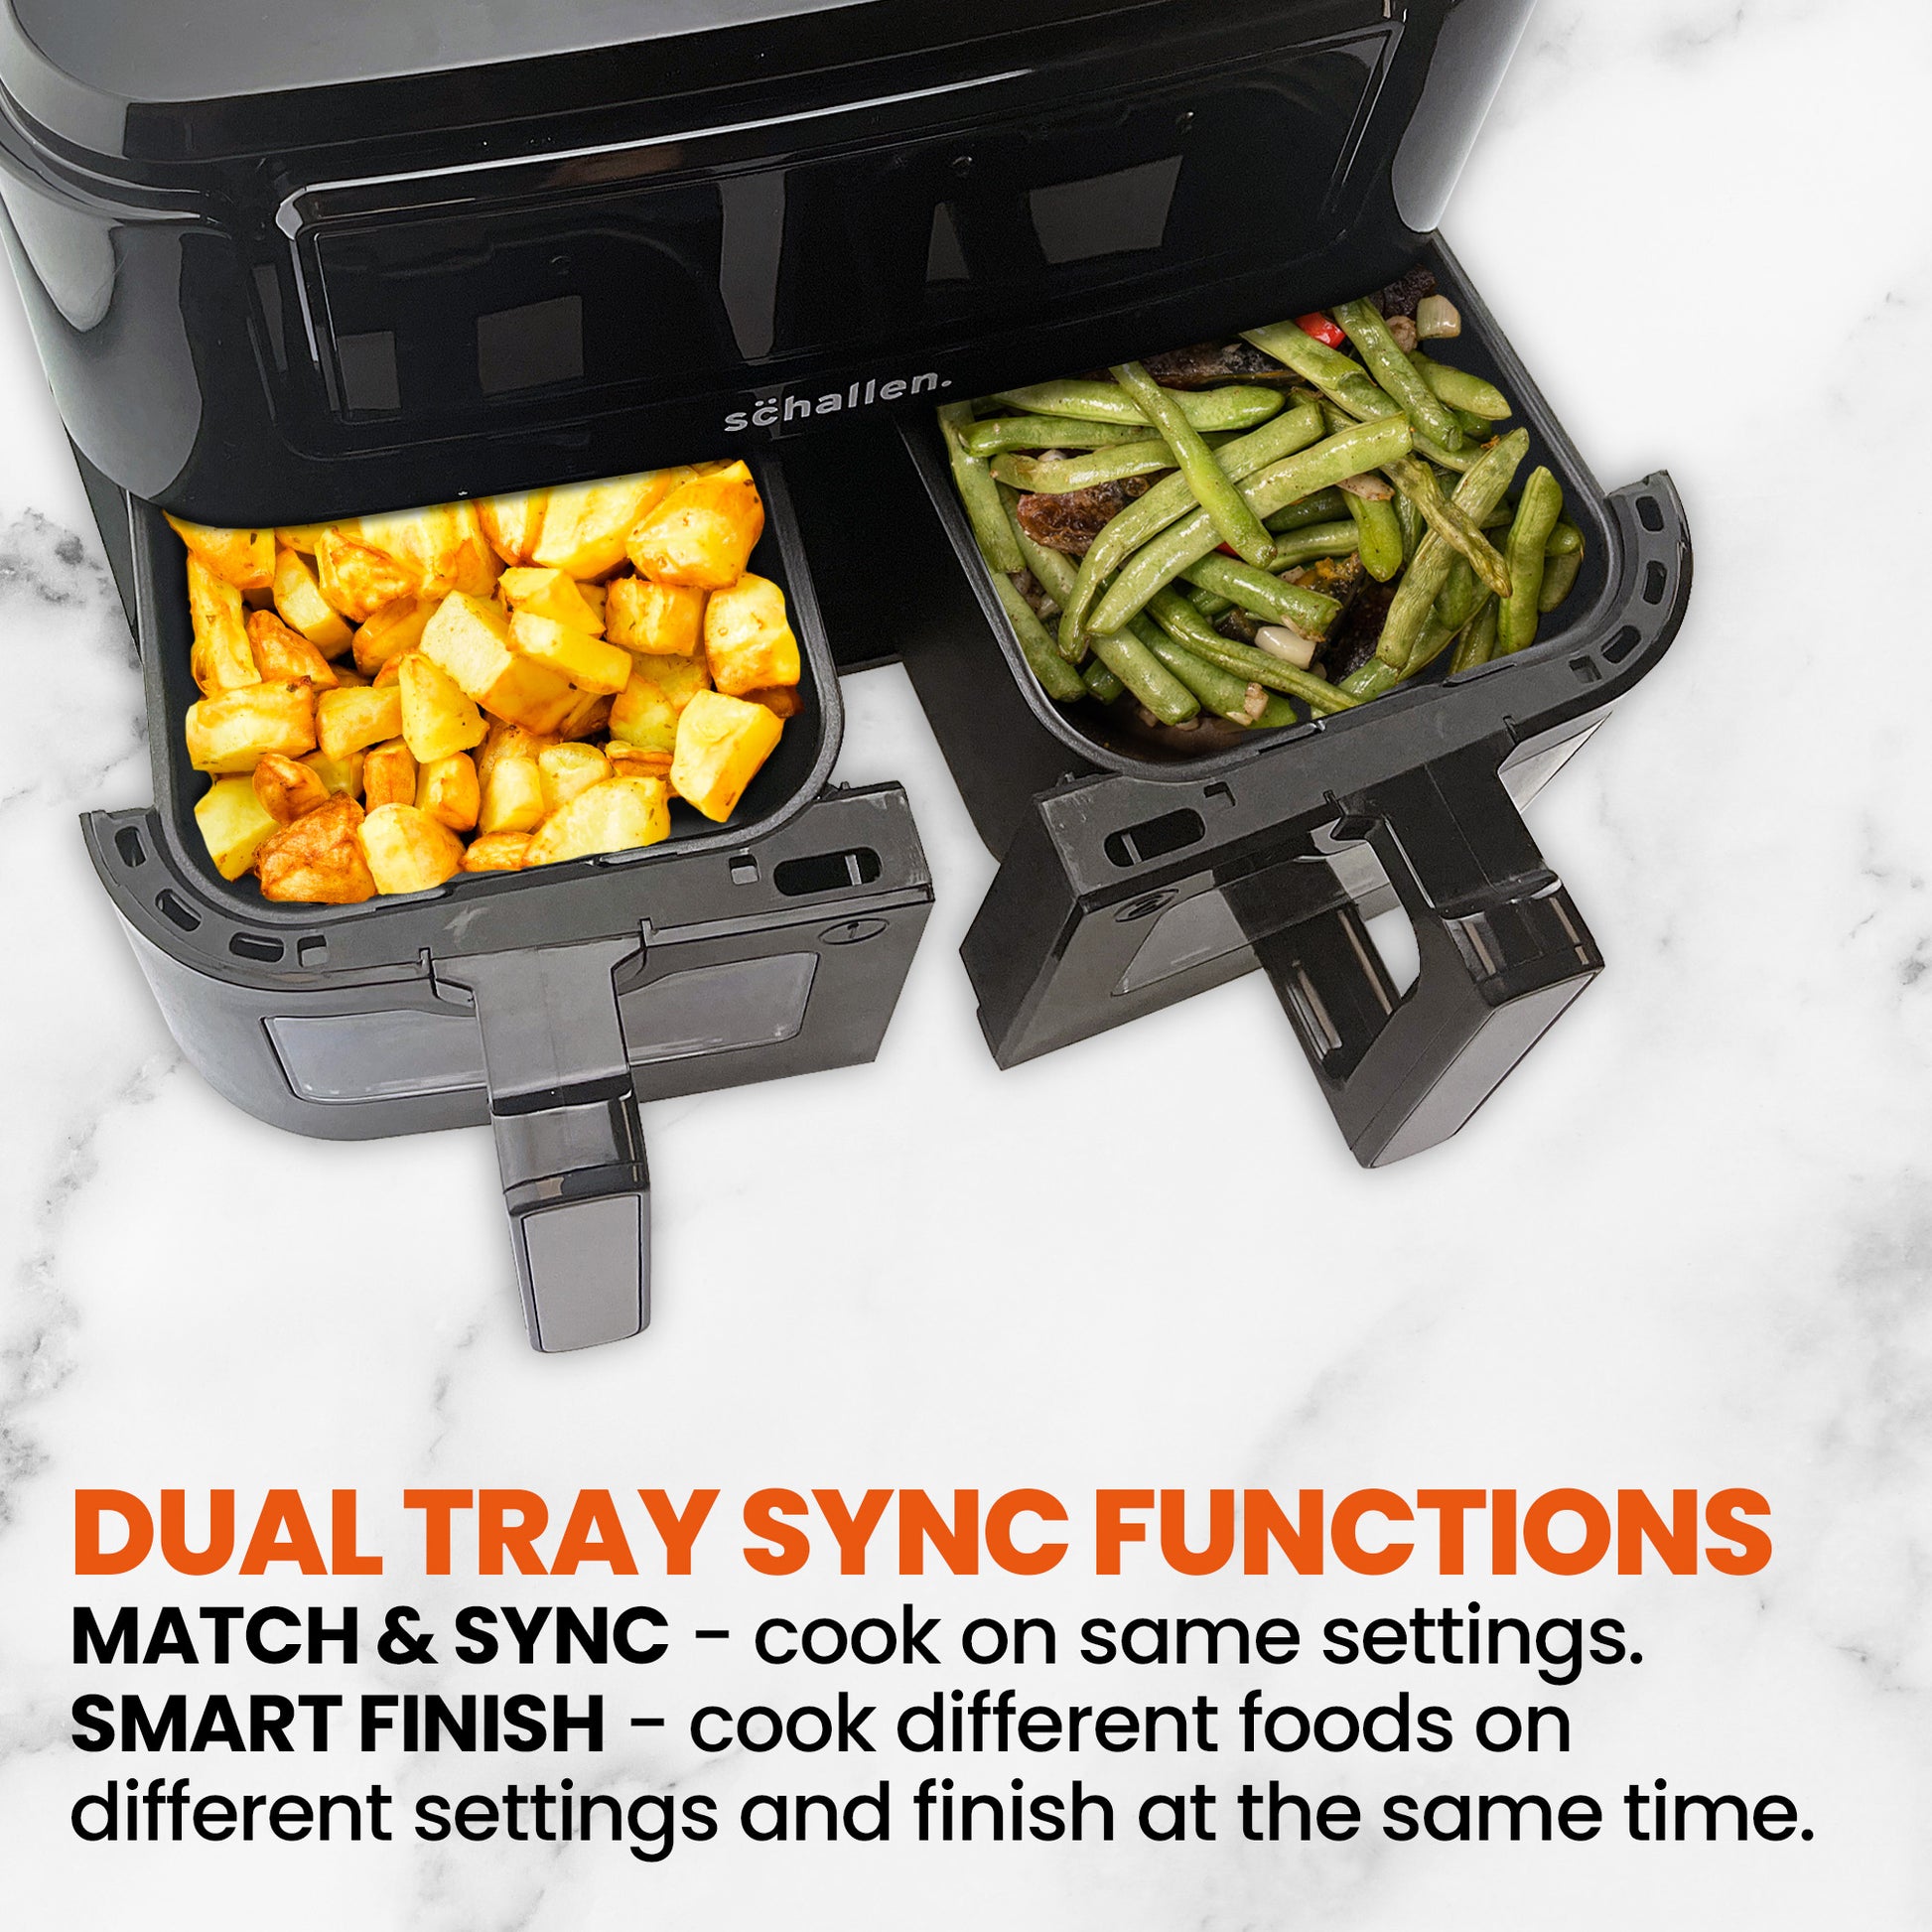 Air Fryer 6L Digital Oven 2400W Healthy Frying Cooker Low Fat Oil Free UK  Stock